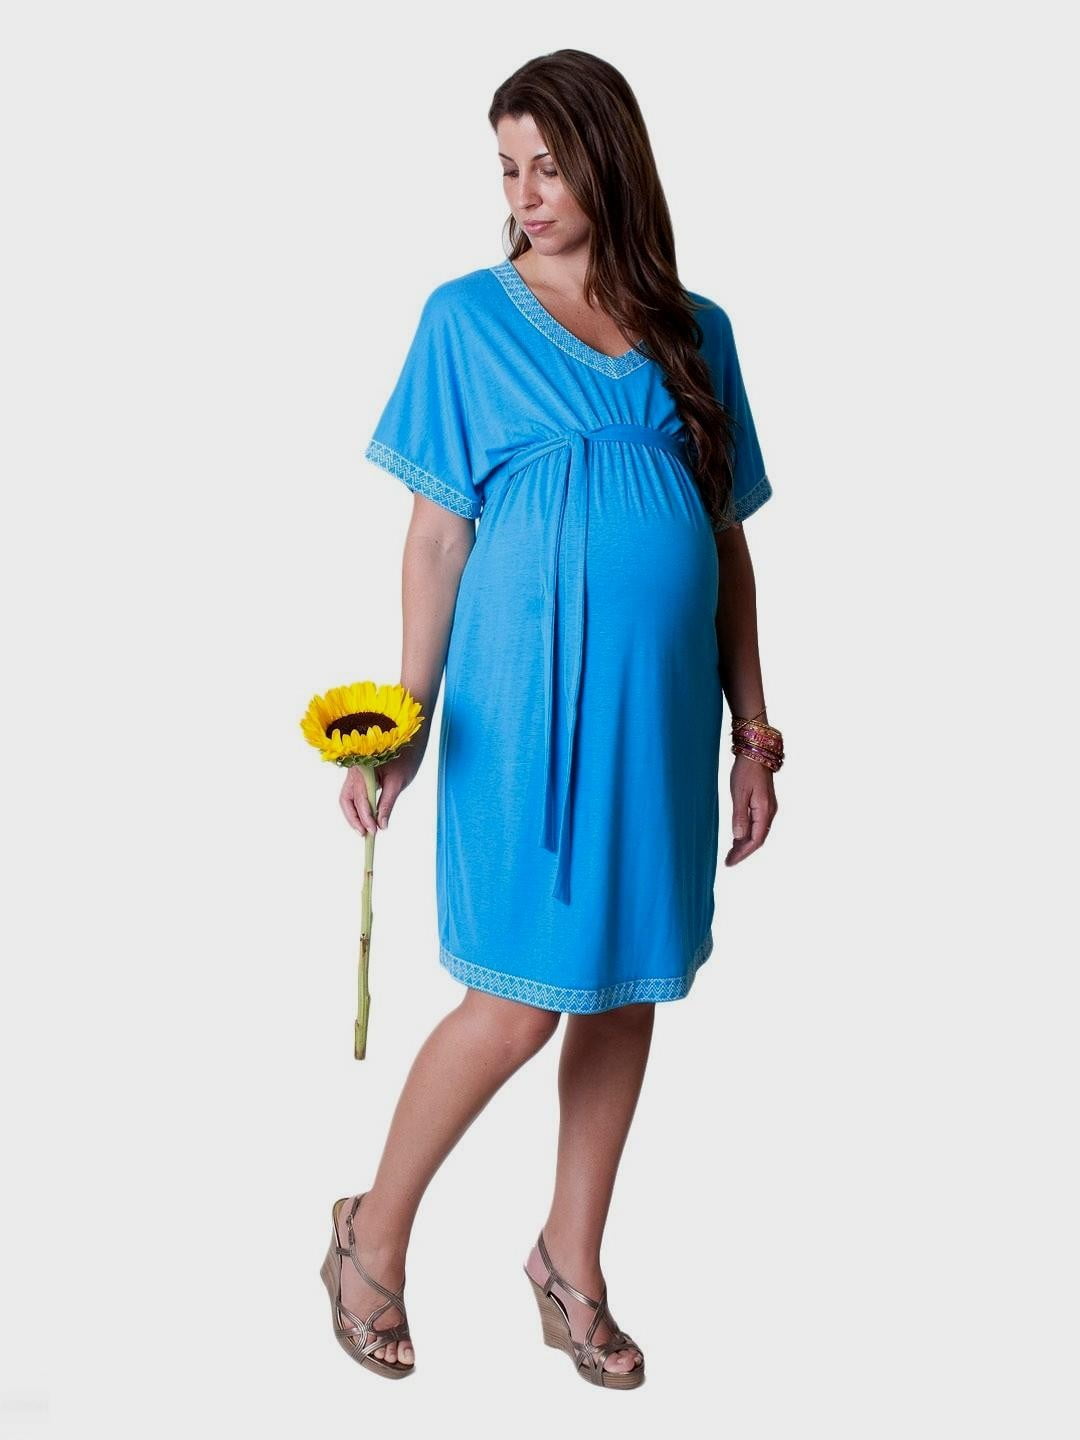 Aqua Blue Maternity Dress For Baby Shower